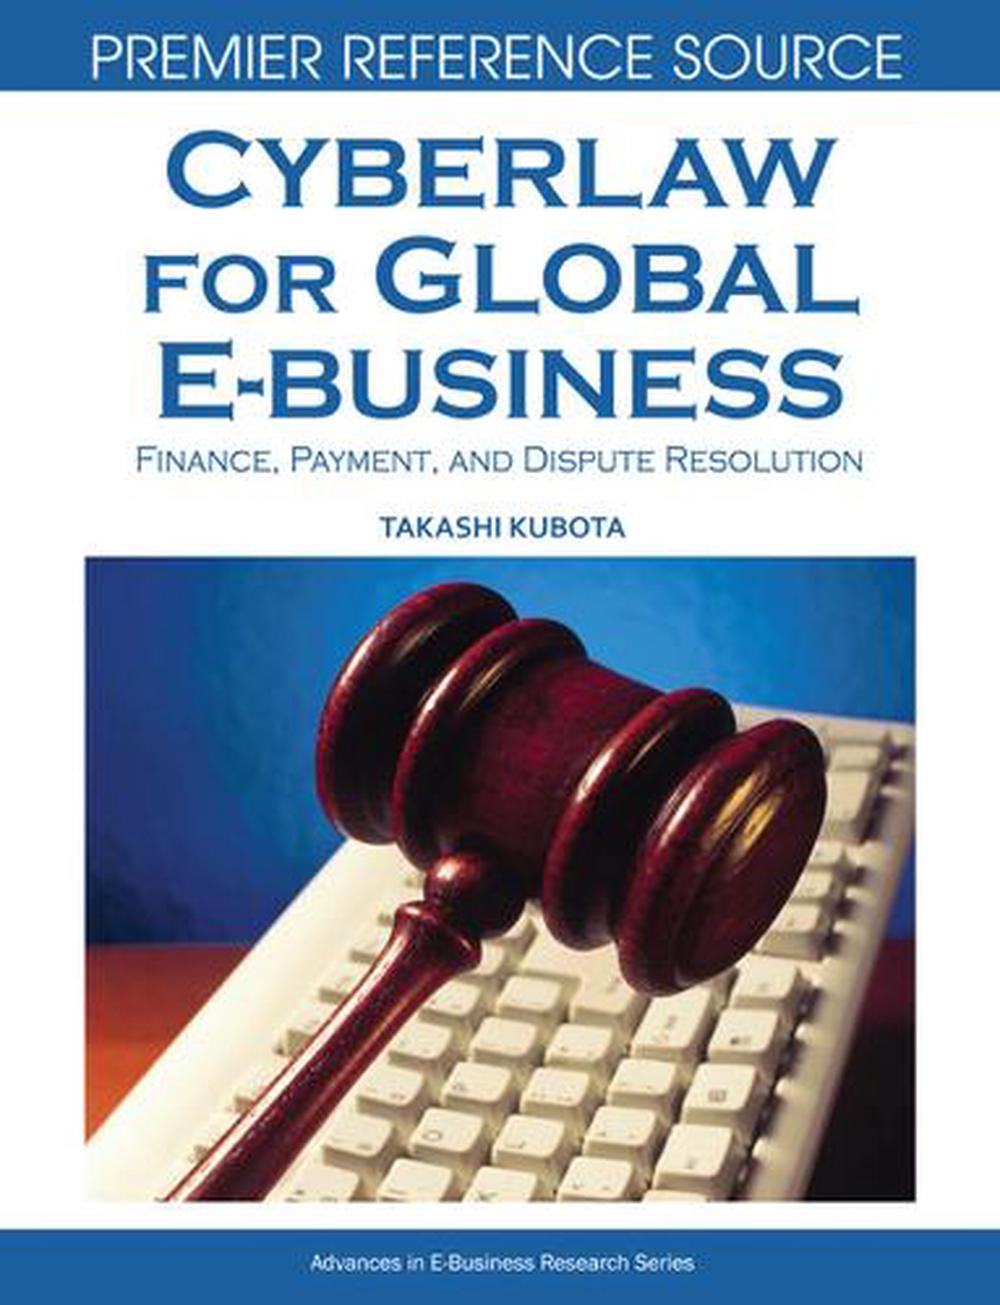 Cyberlaw for Global E-Business by Takashi Kubota